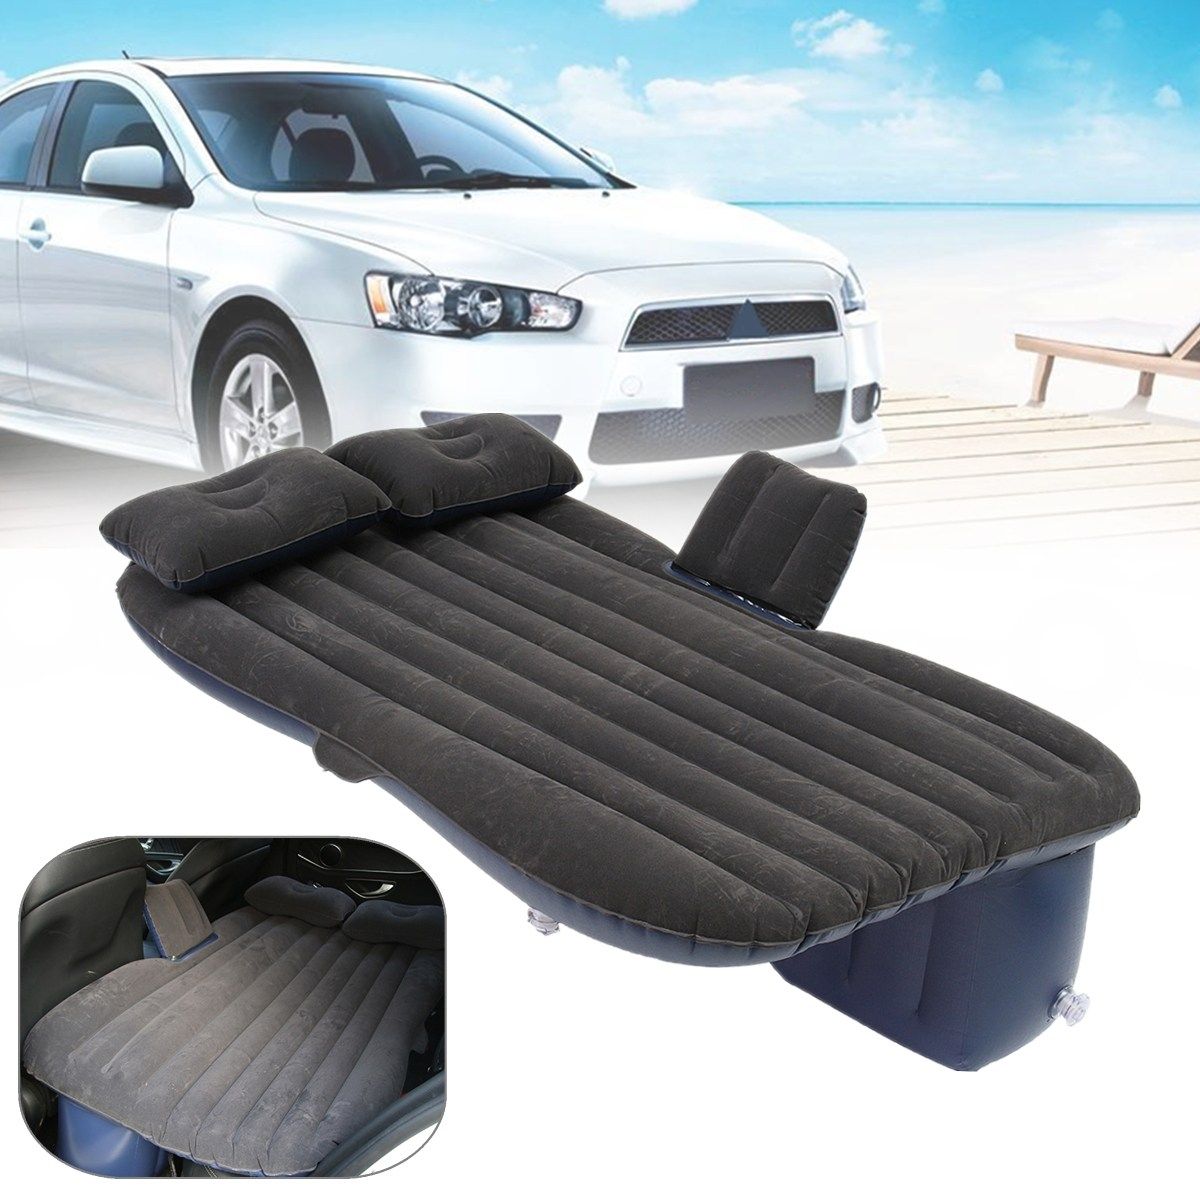 Outdoor Camping Car Back Seat Cover Air Mattress Travel Mat Bed